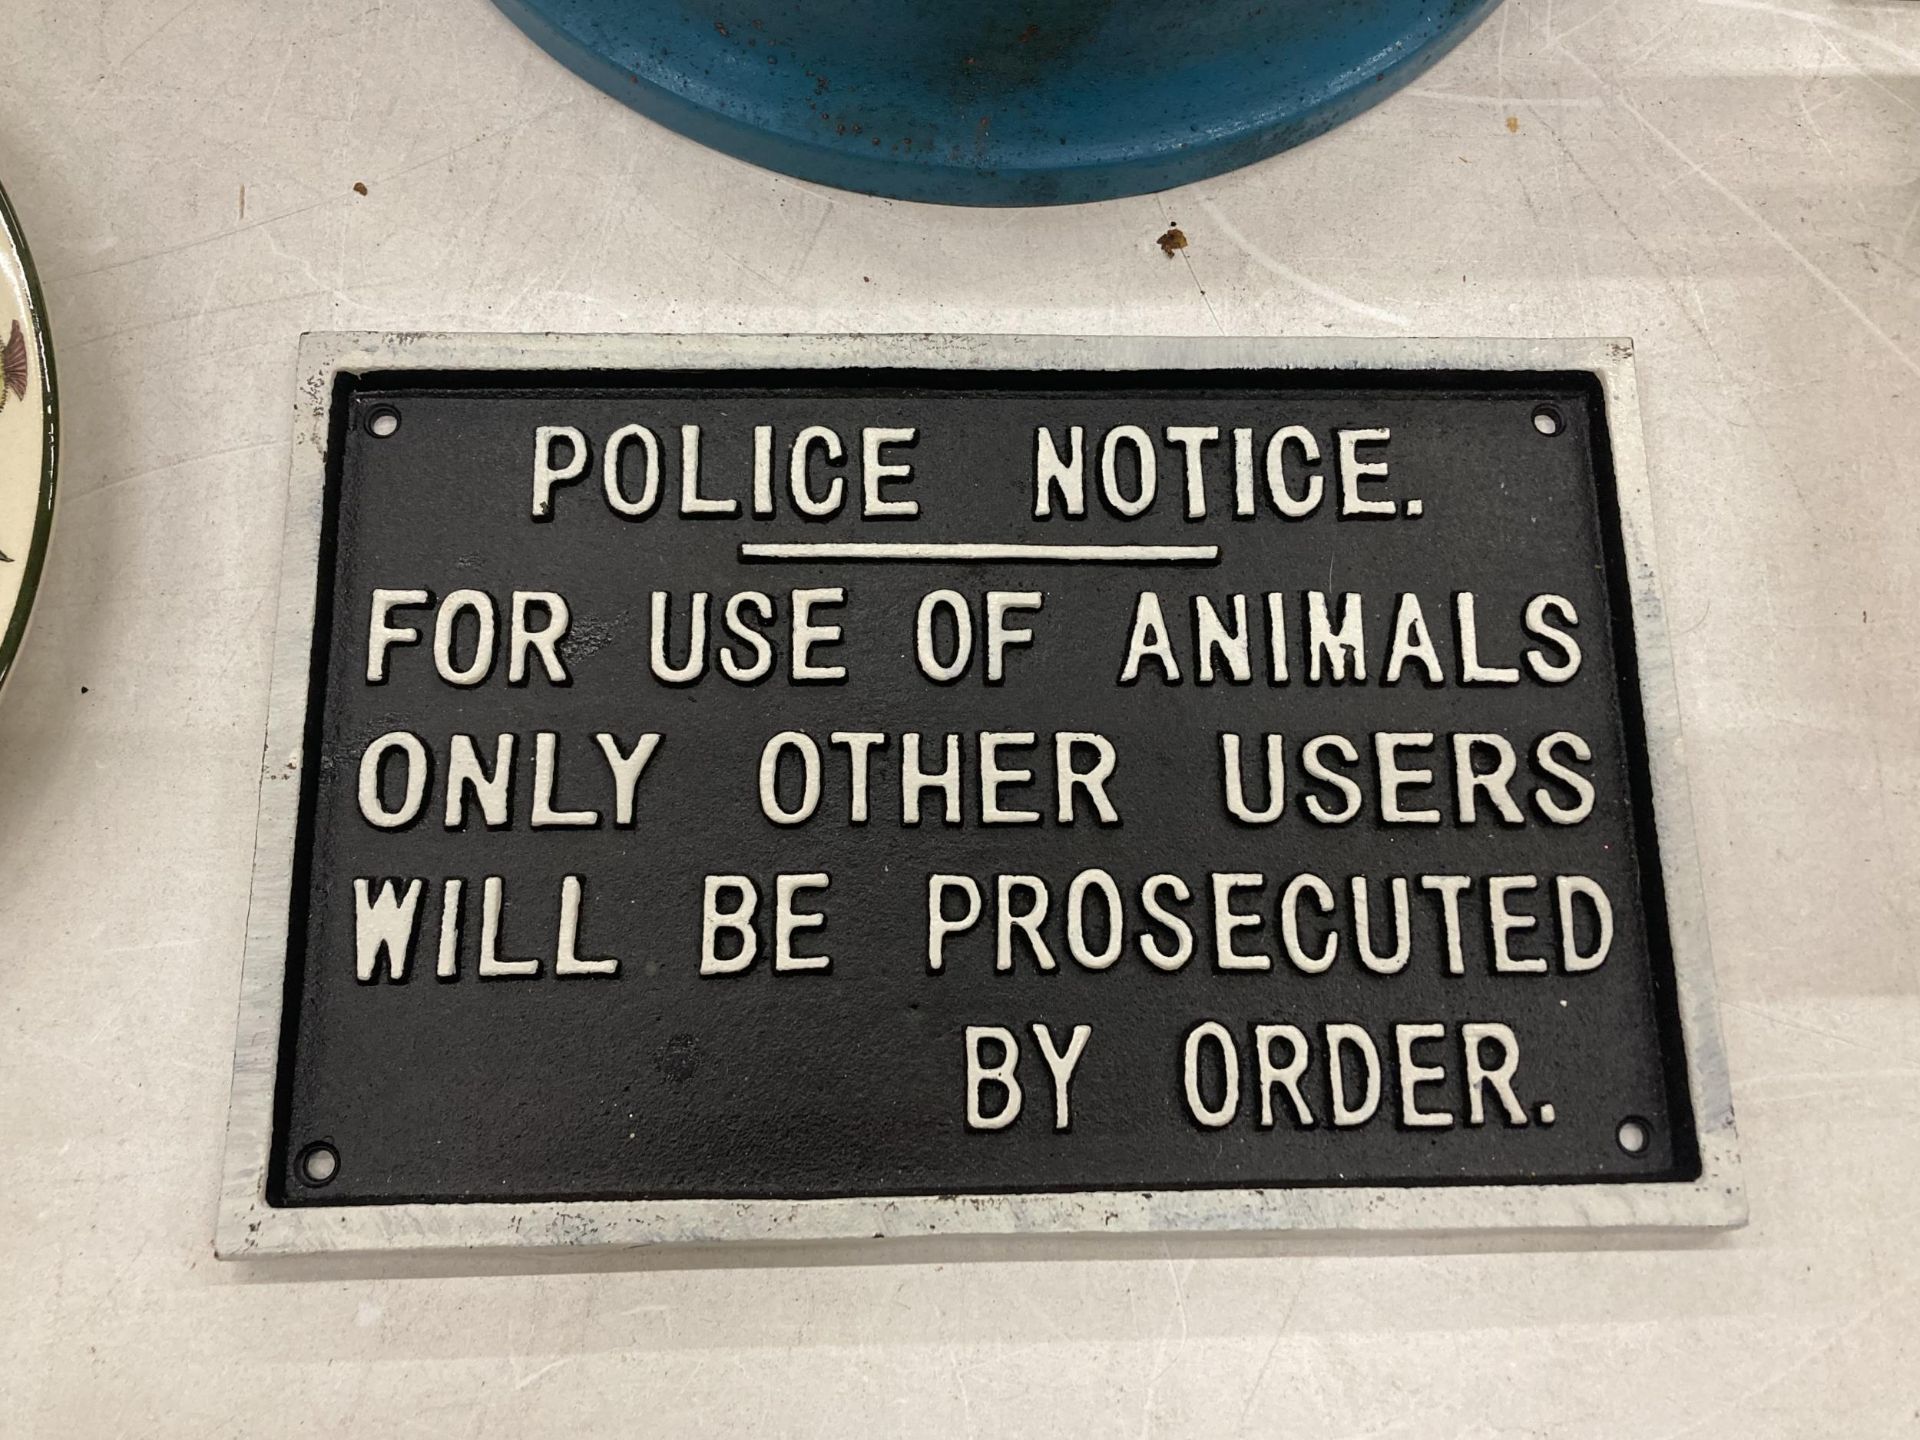 A CAST POLICE NOTICE SIGN